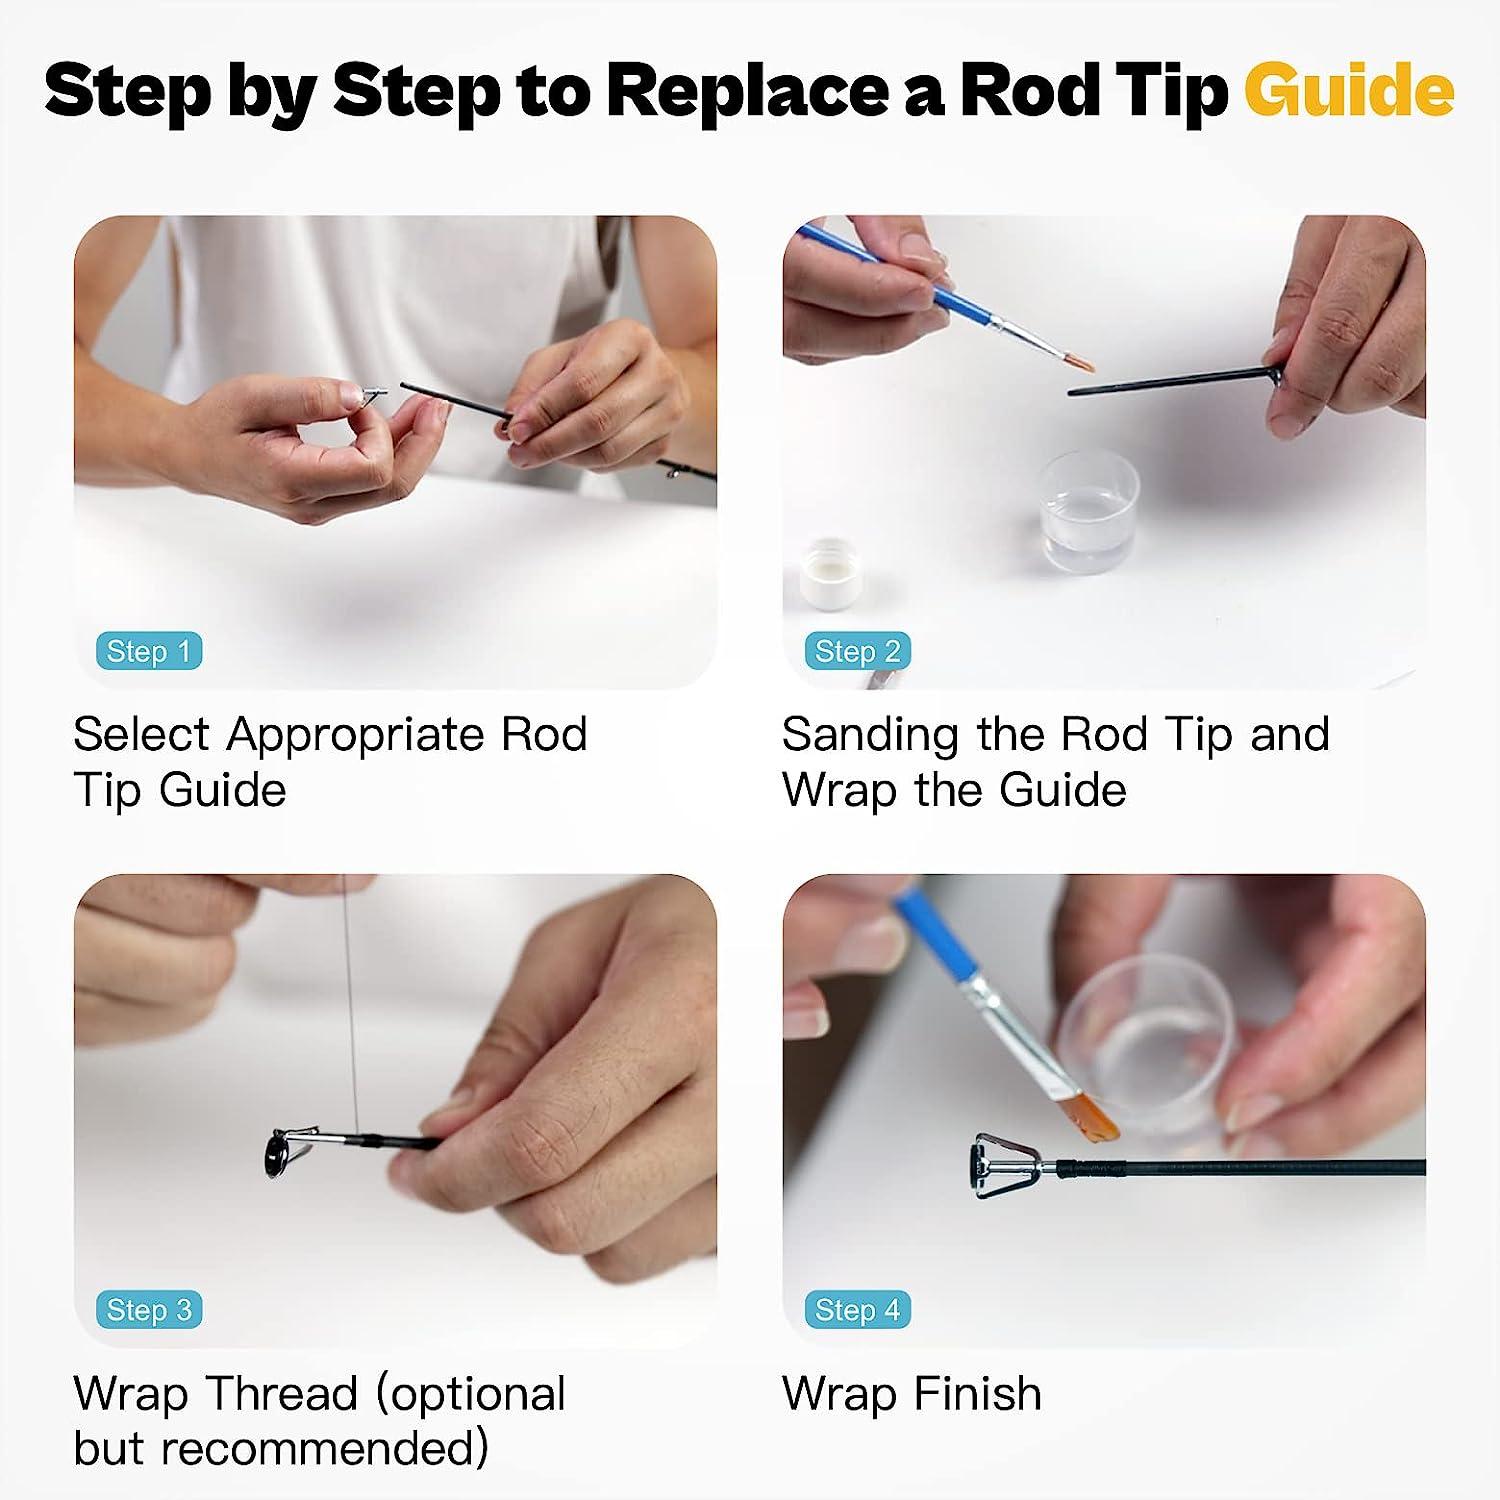 OJY&DOIIIY Fishing Rod Tip Repair Kit with Glue,Complete Supplies